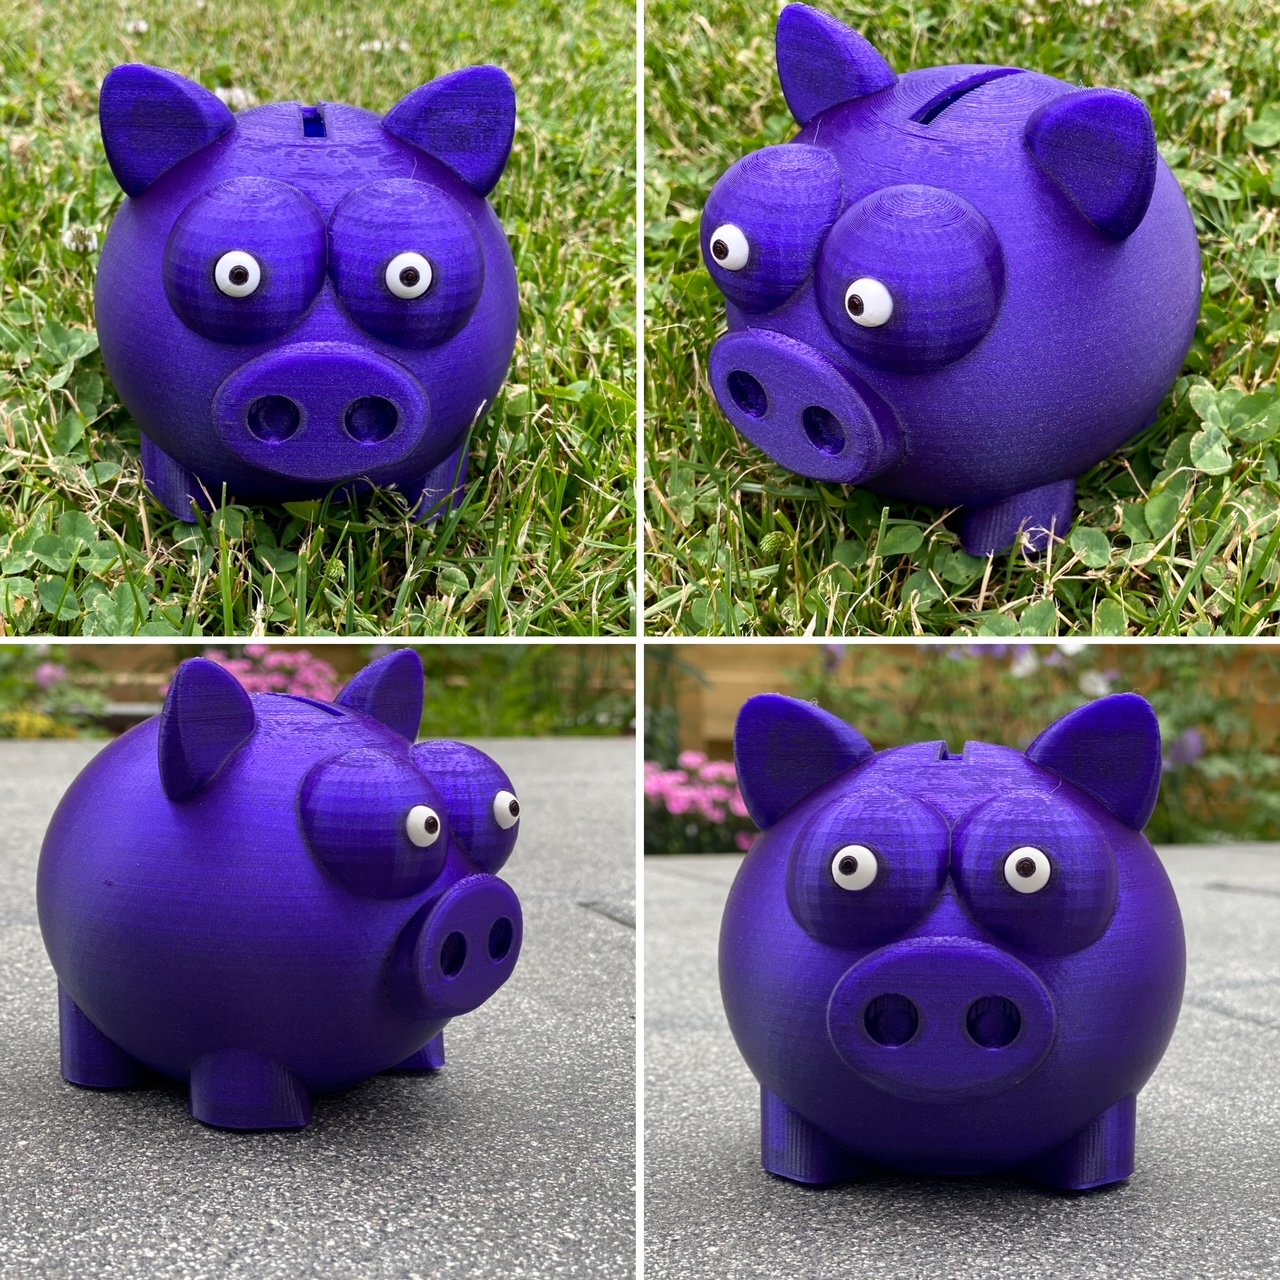 Piggy Bank with Pop-Eyes